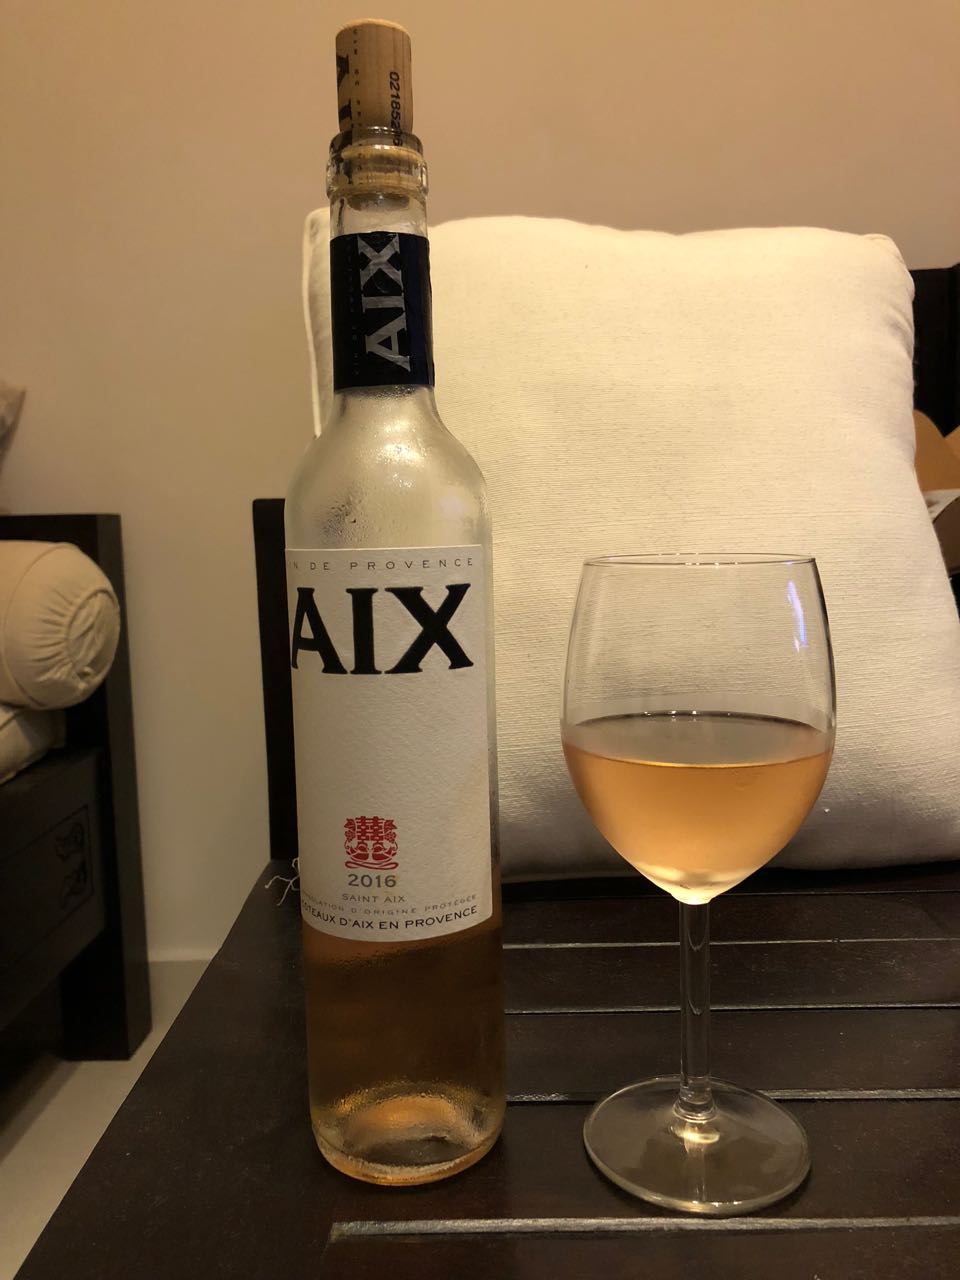 AIX Rosé 2016 bottle and glass